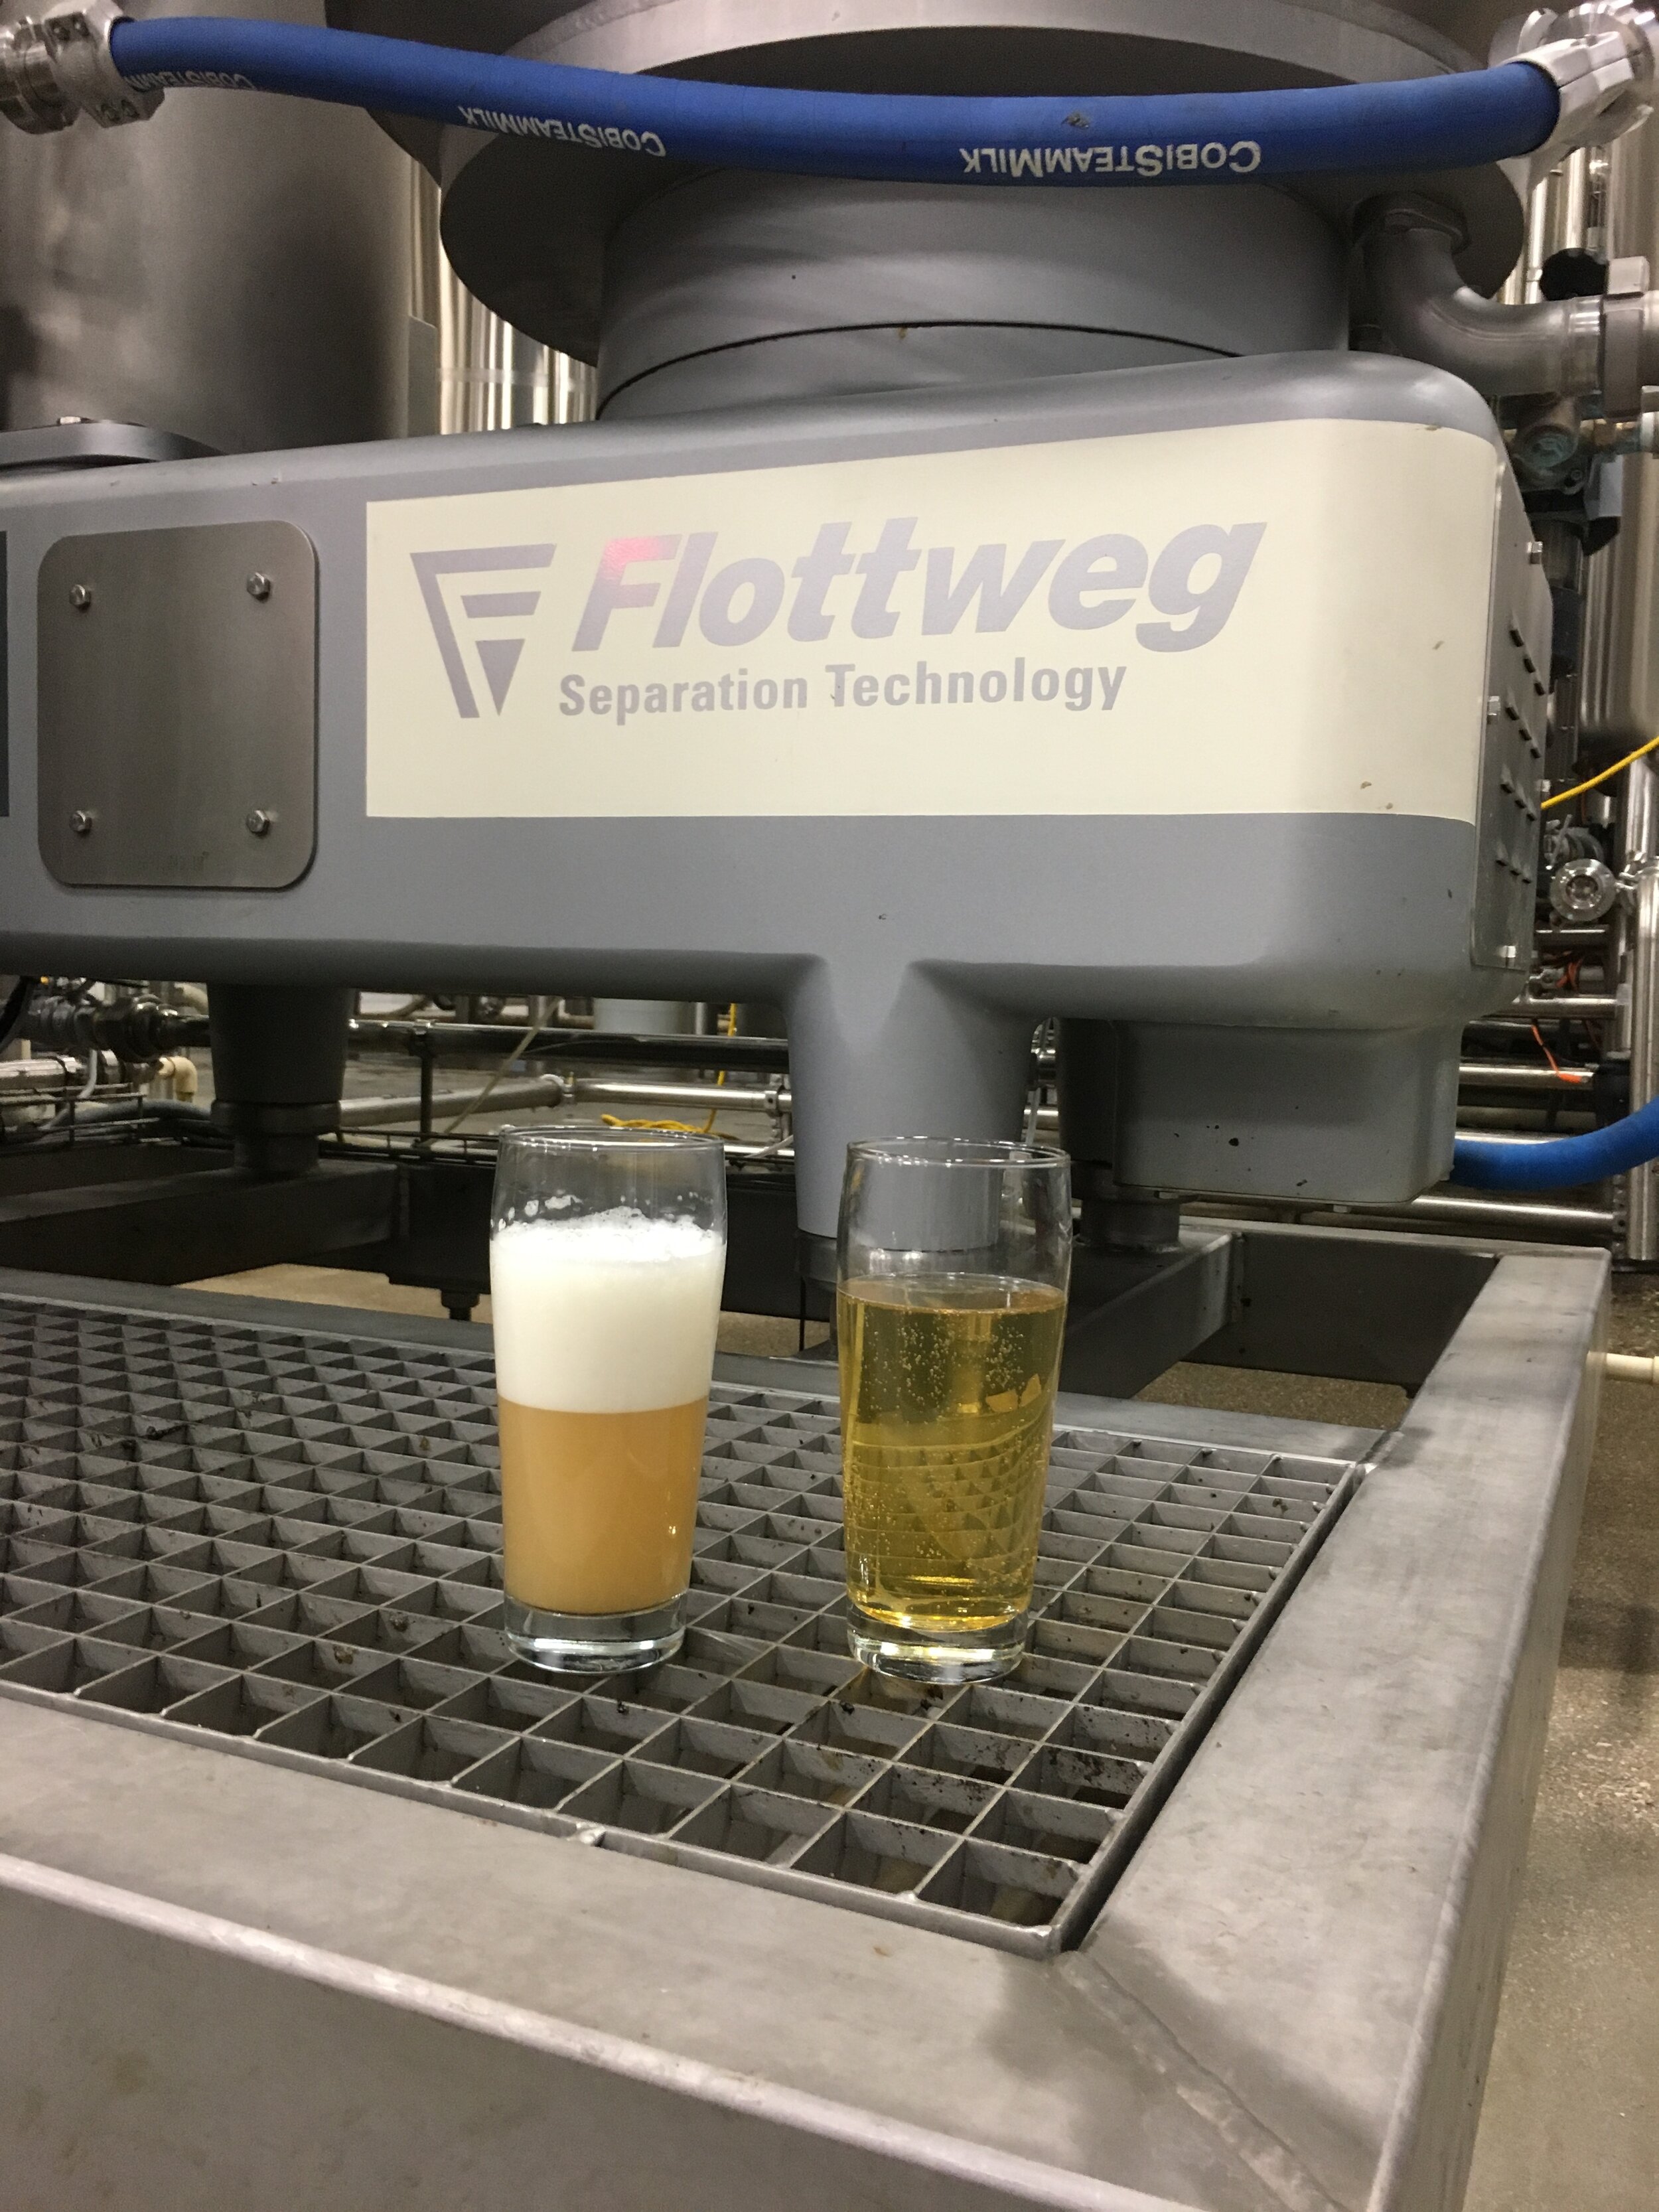 Flottweg Decanters Clarify Beer Production